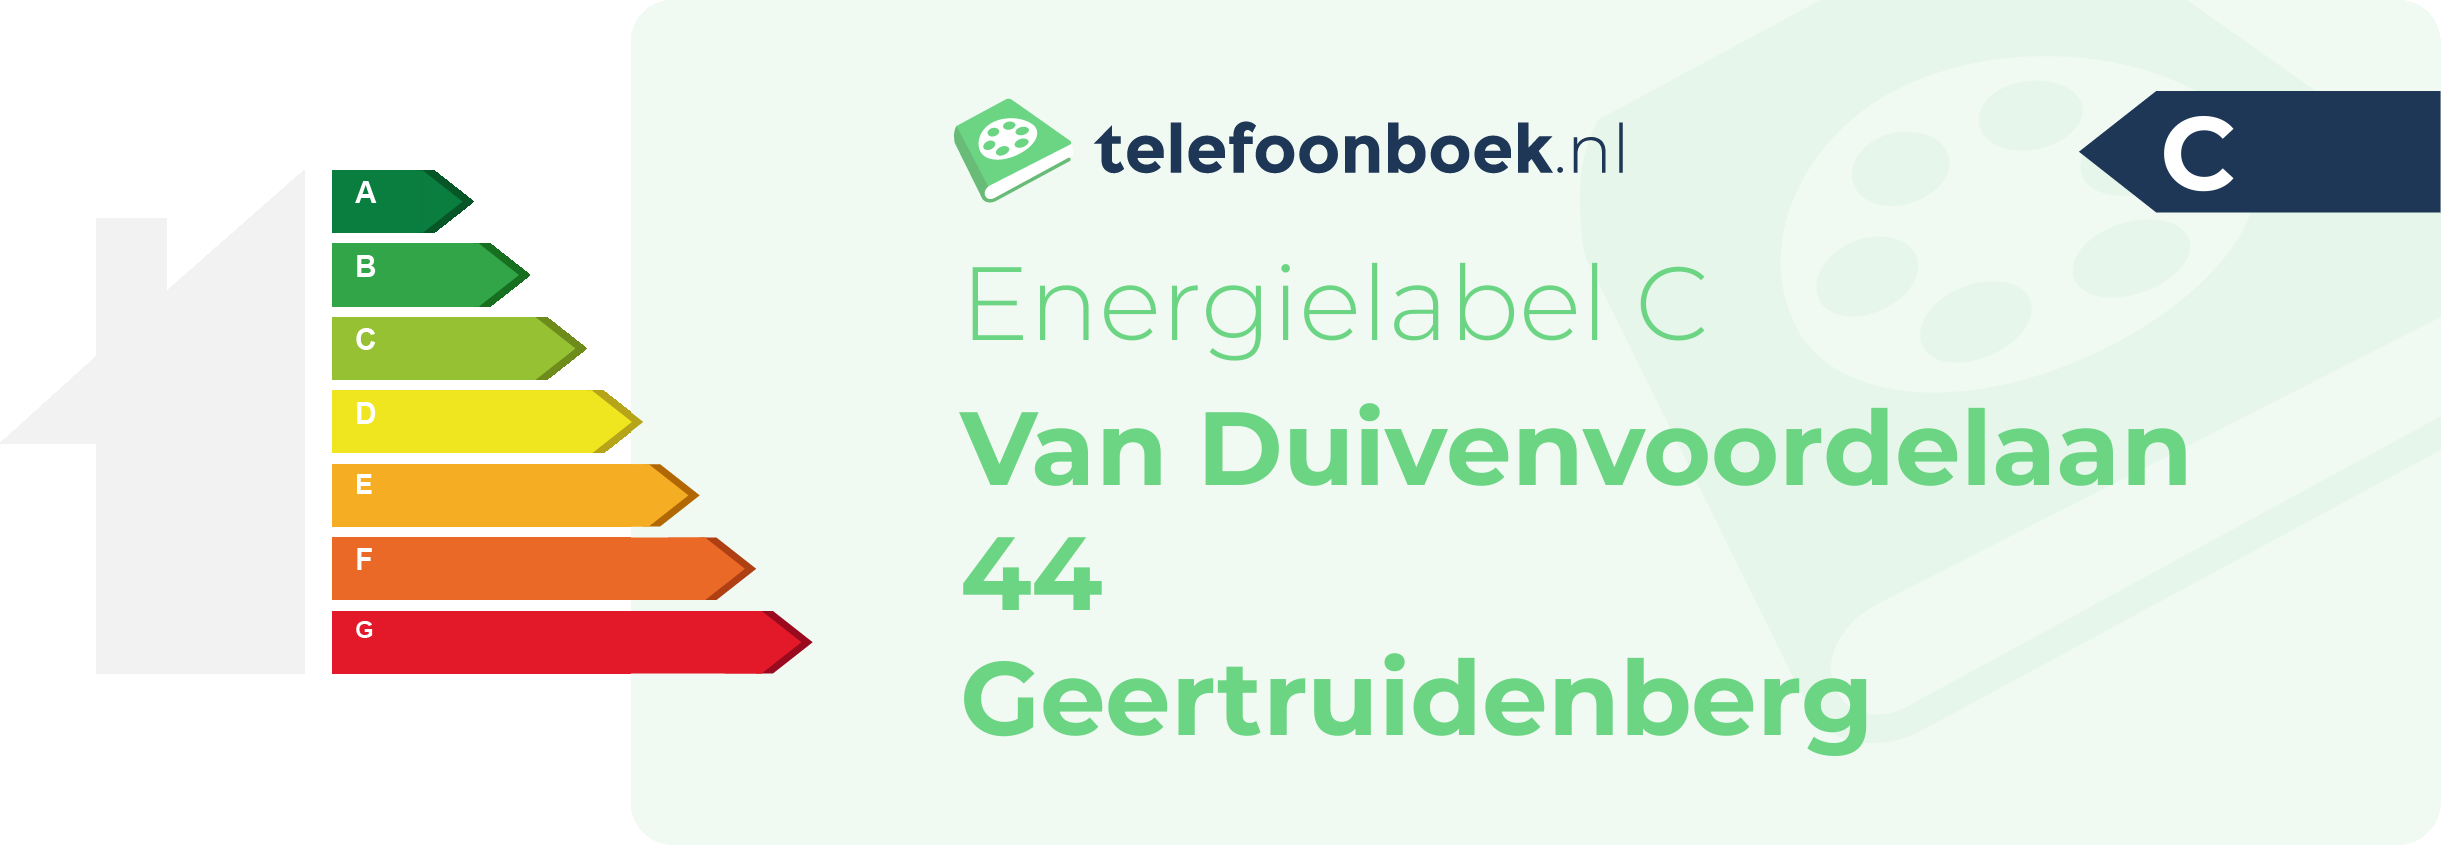 Energielabel Van Duivenvoordelaan 44 Geertruidenberg